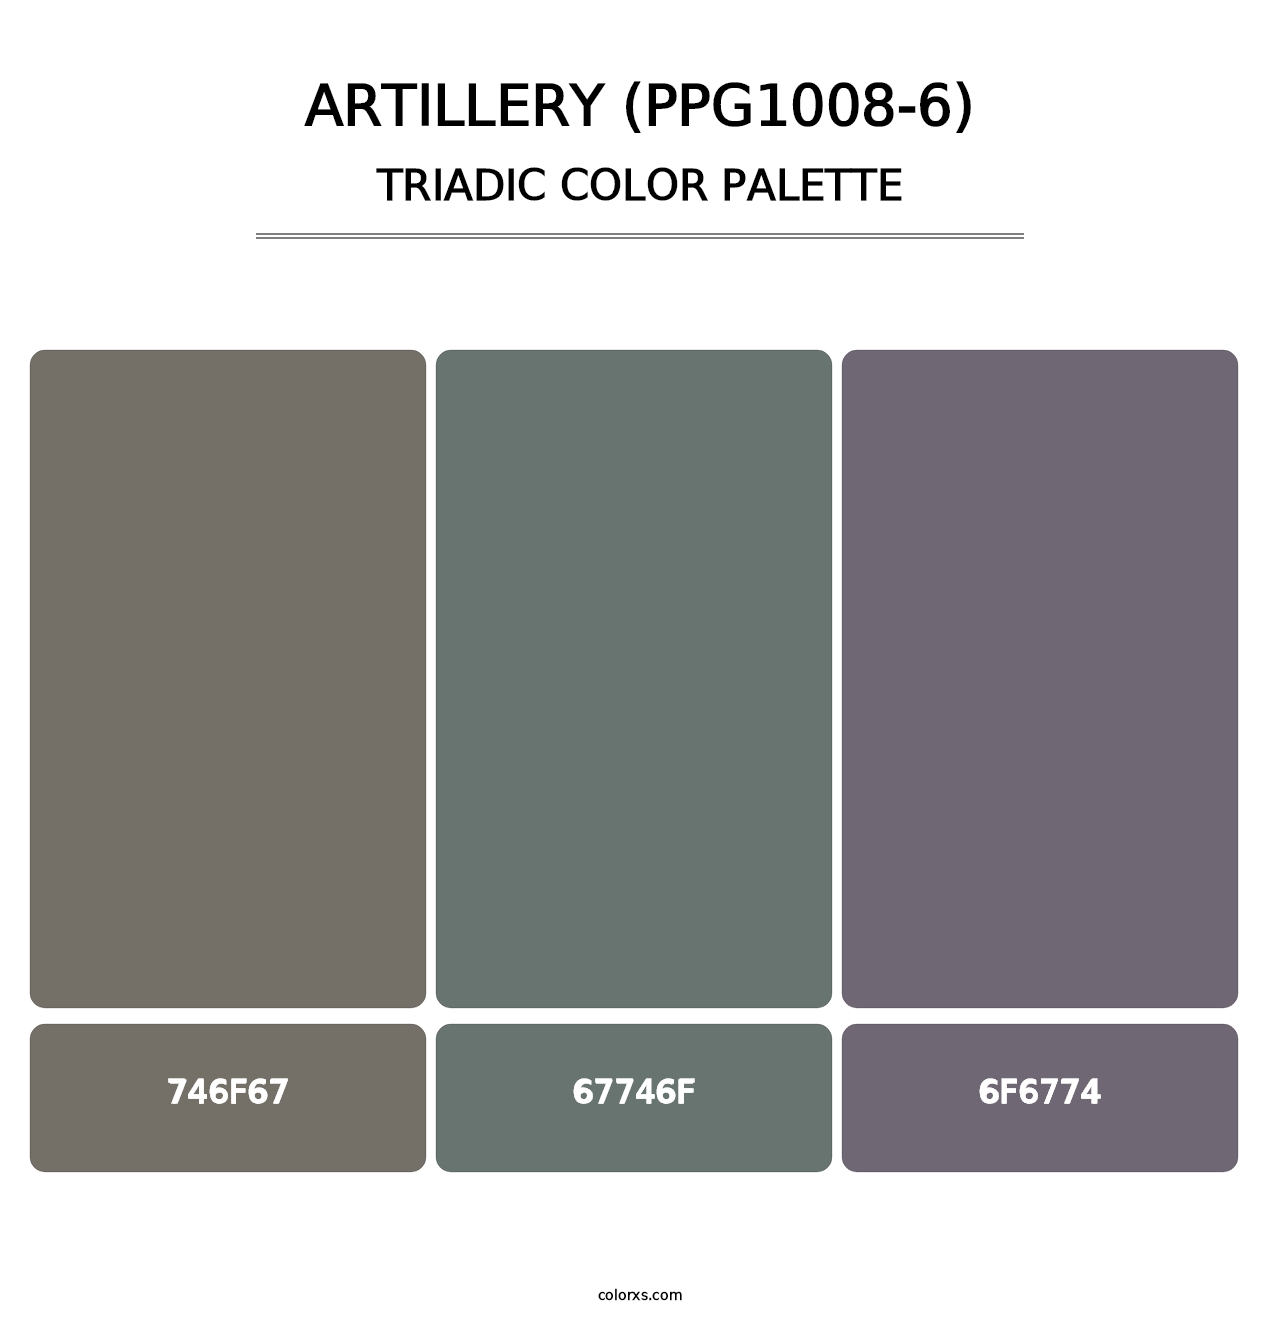 Artillery (PPG1008-6) - Triadic Color Palette